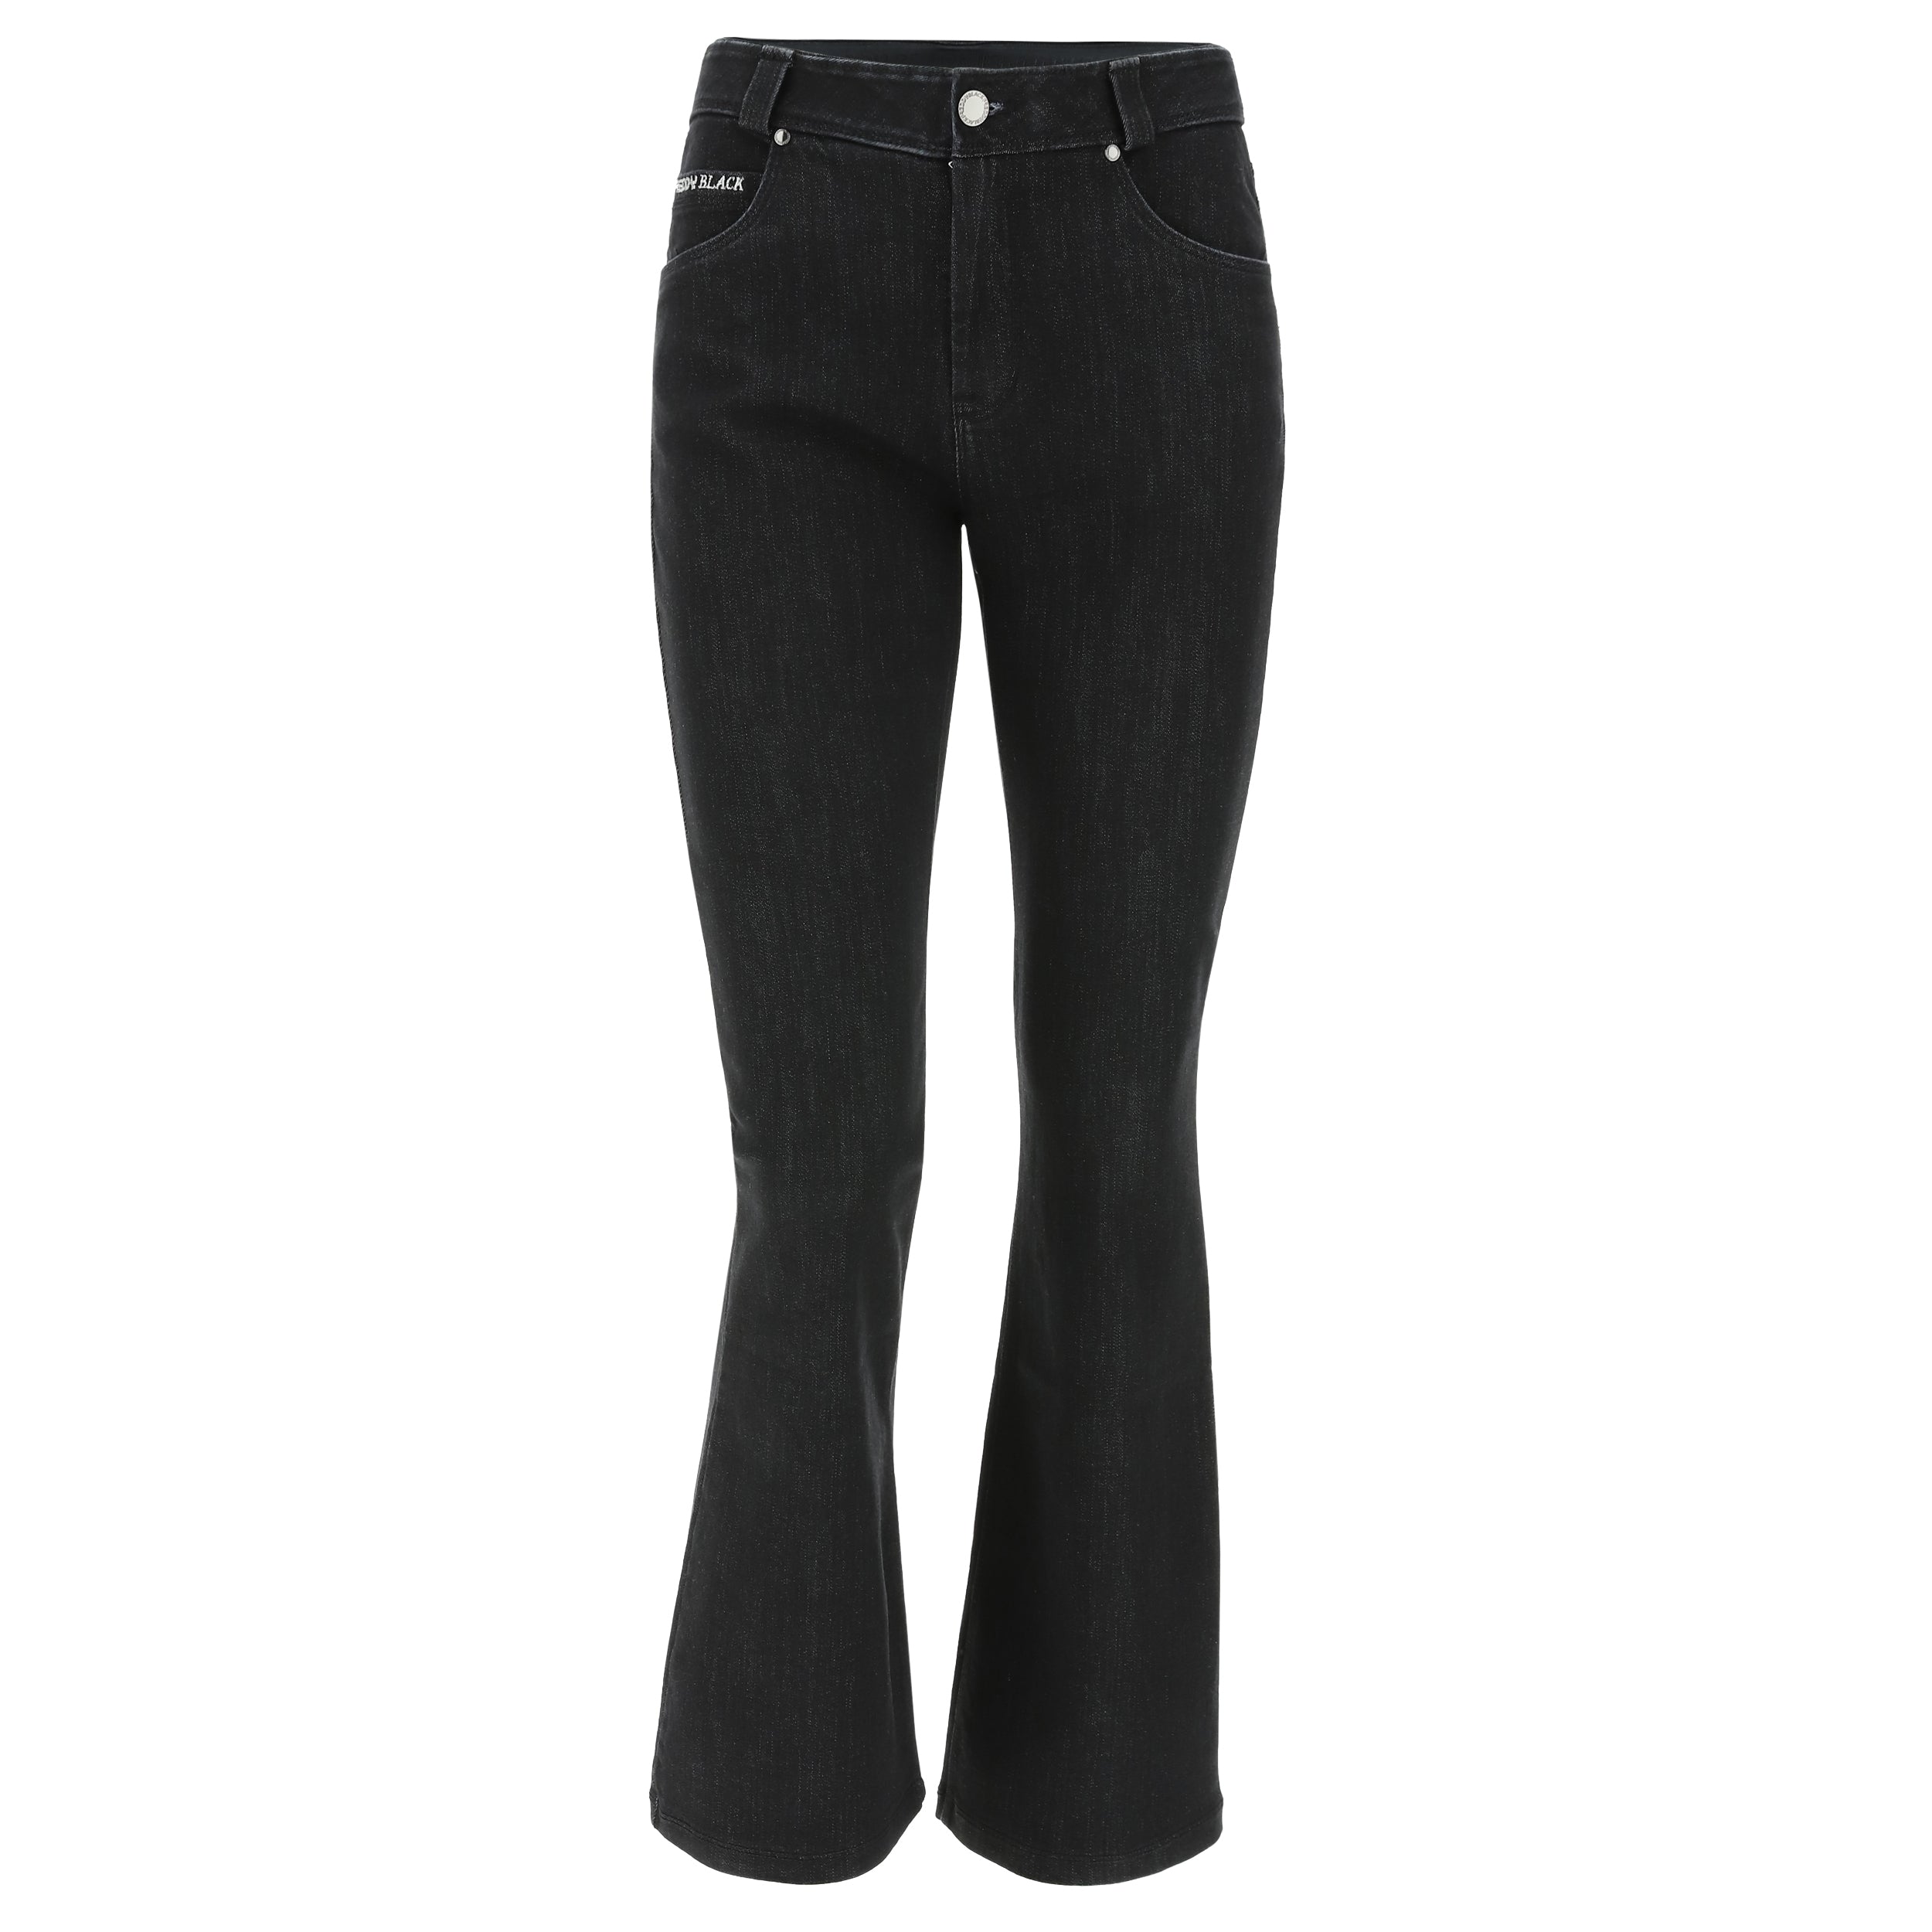 BLACK13RF103-J7N) Cropped Flare FREDDY BLACK Jeans in Stretch Black D –  Freddy Pantroom Benelux